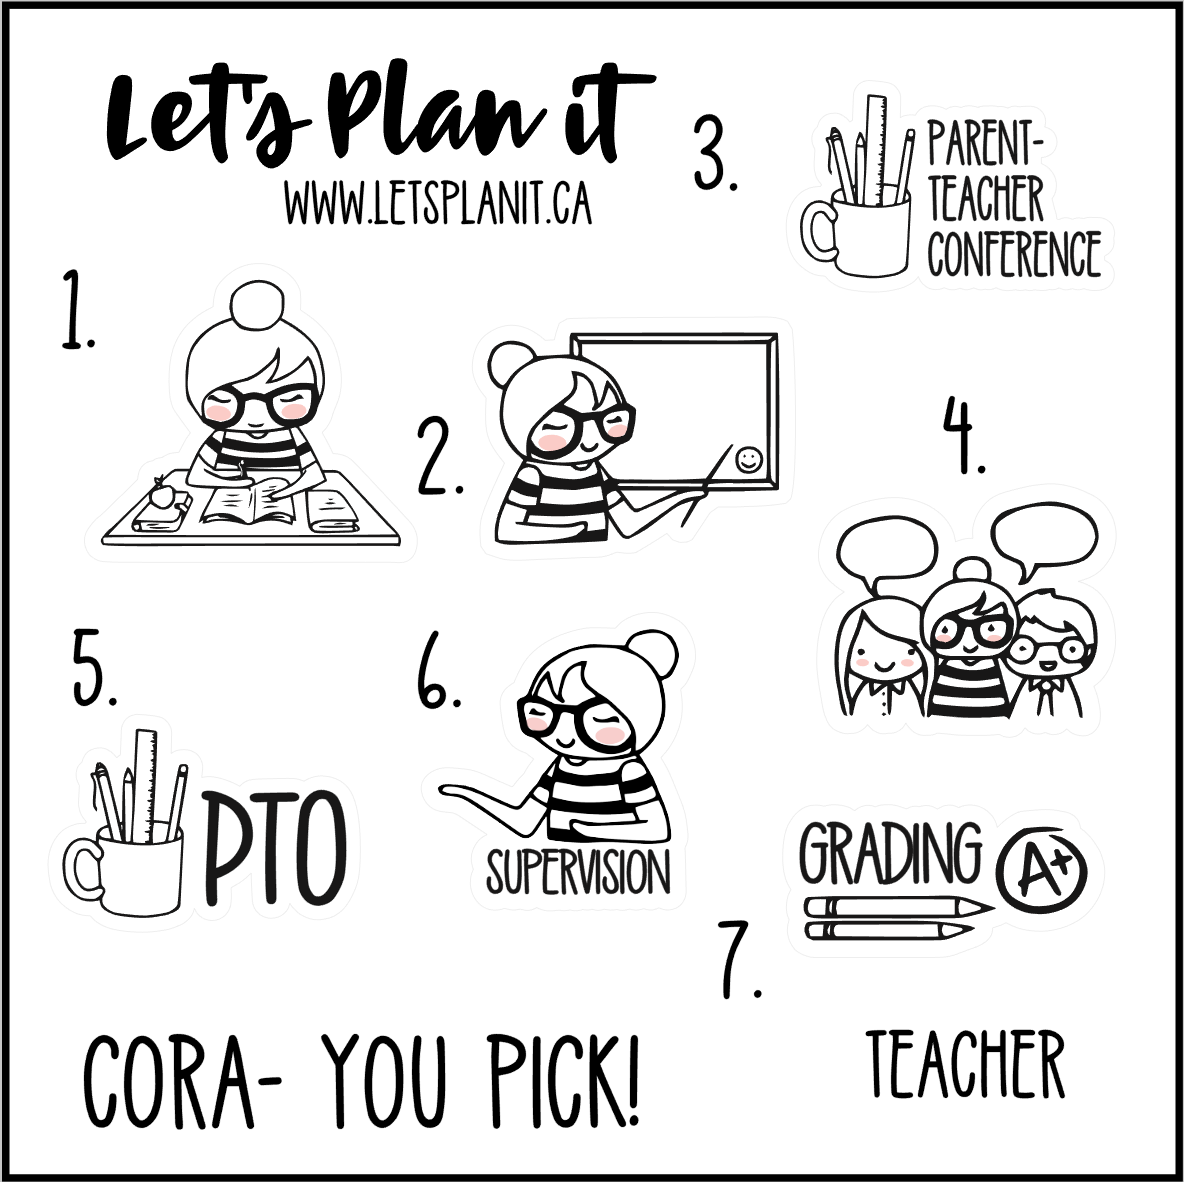 Cora-u-pick- Teacher